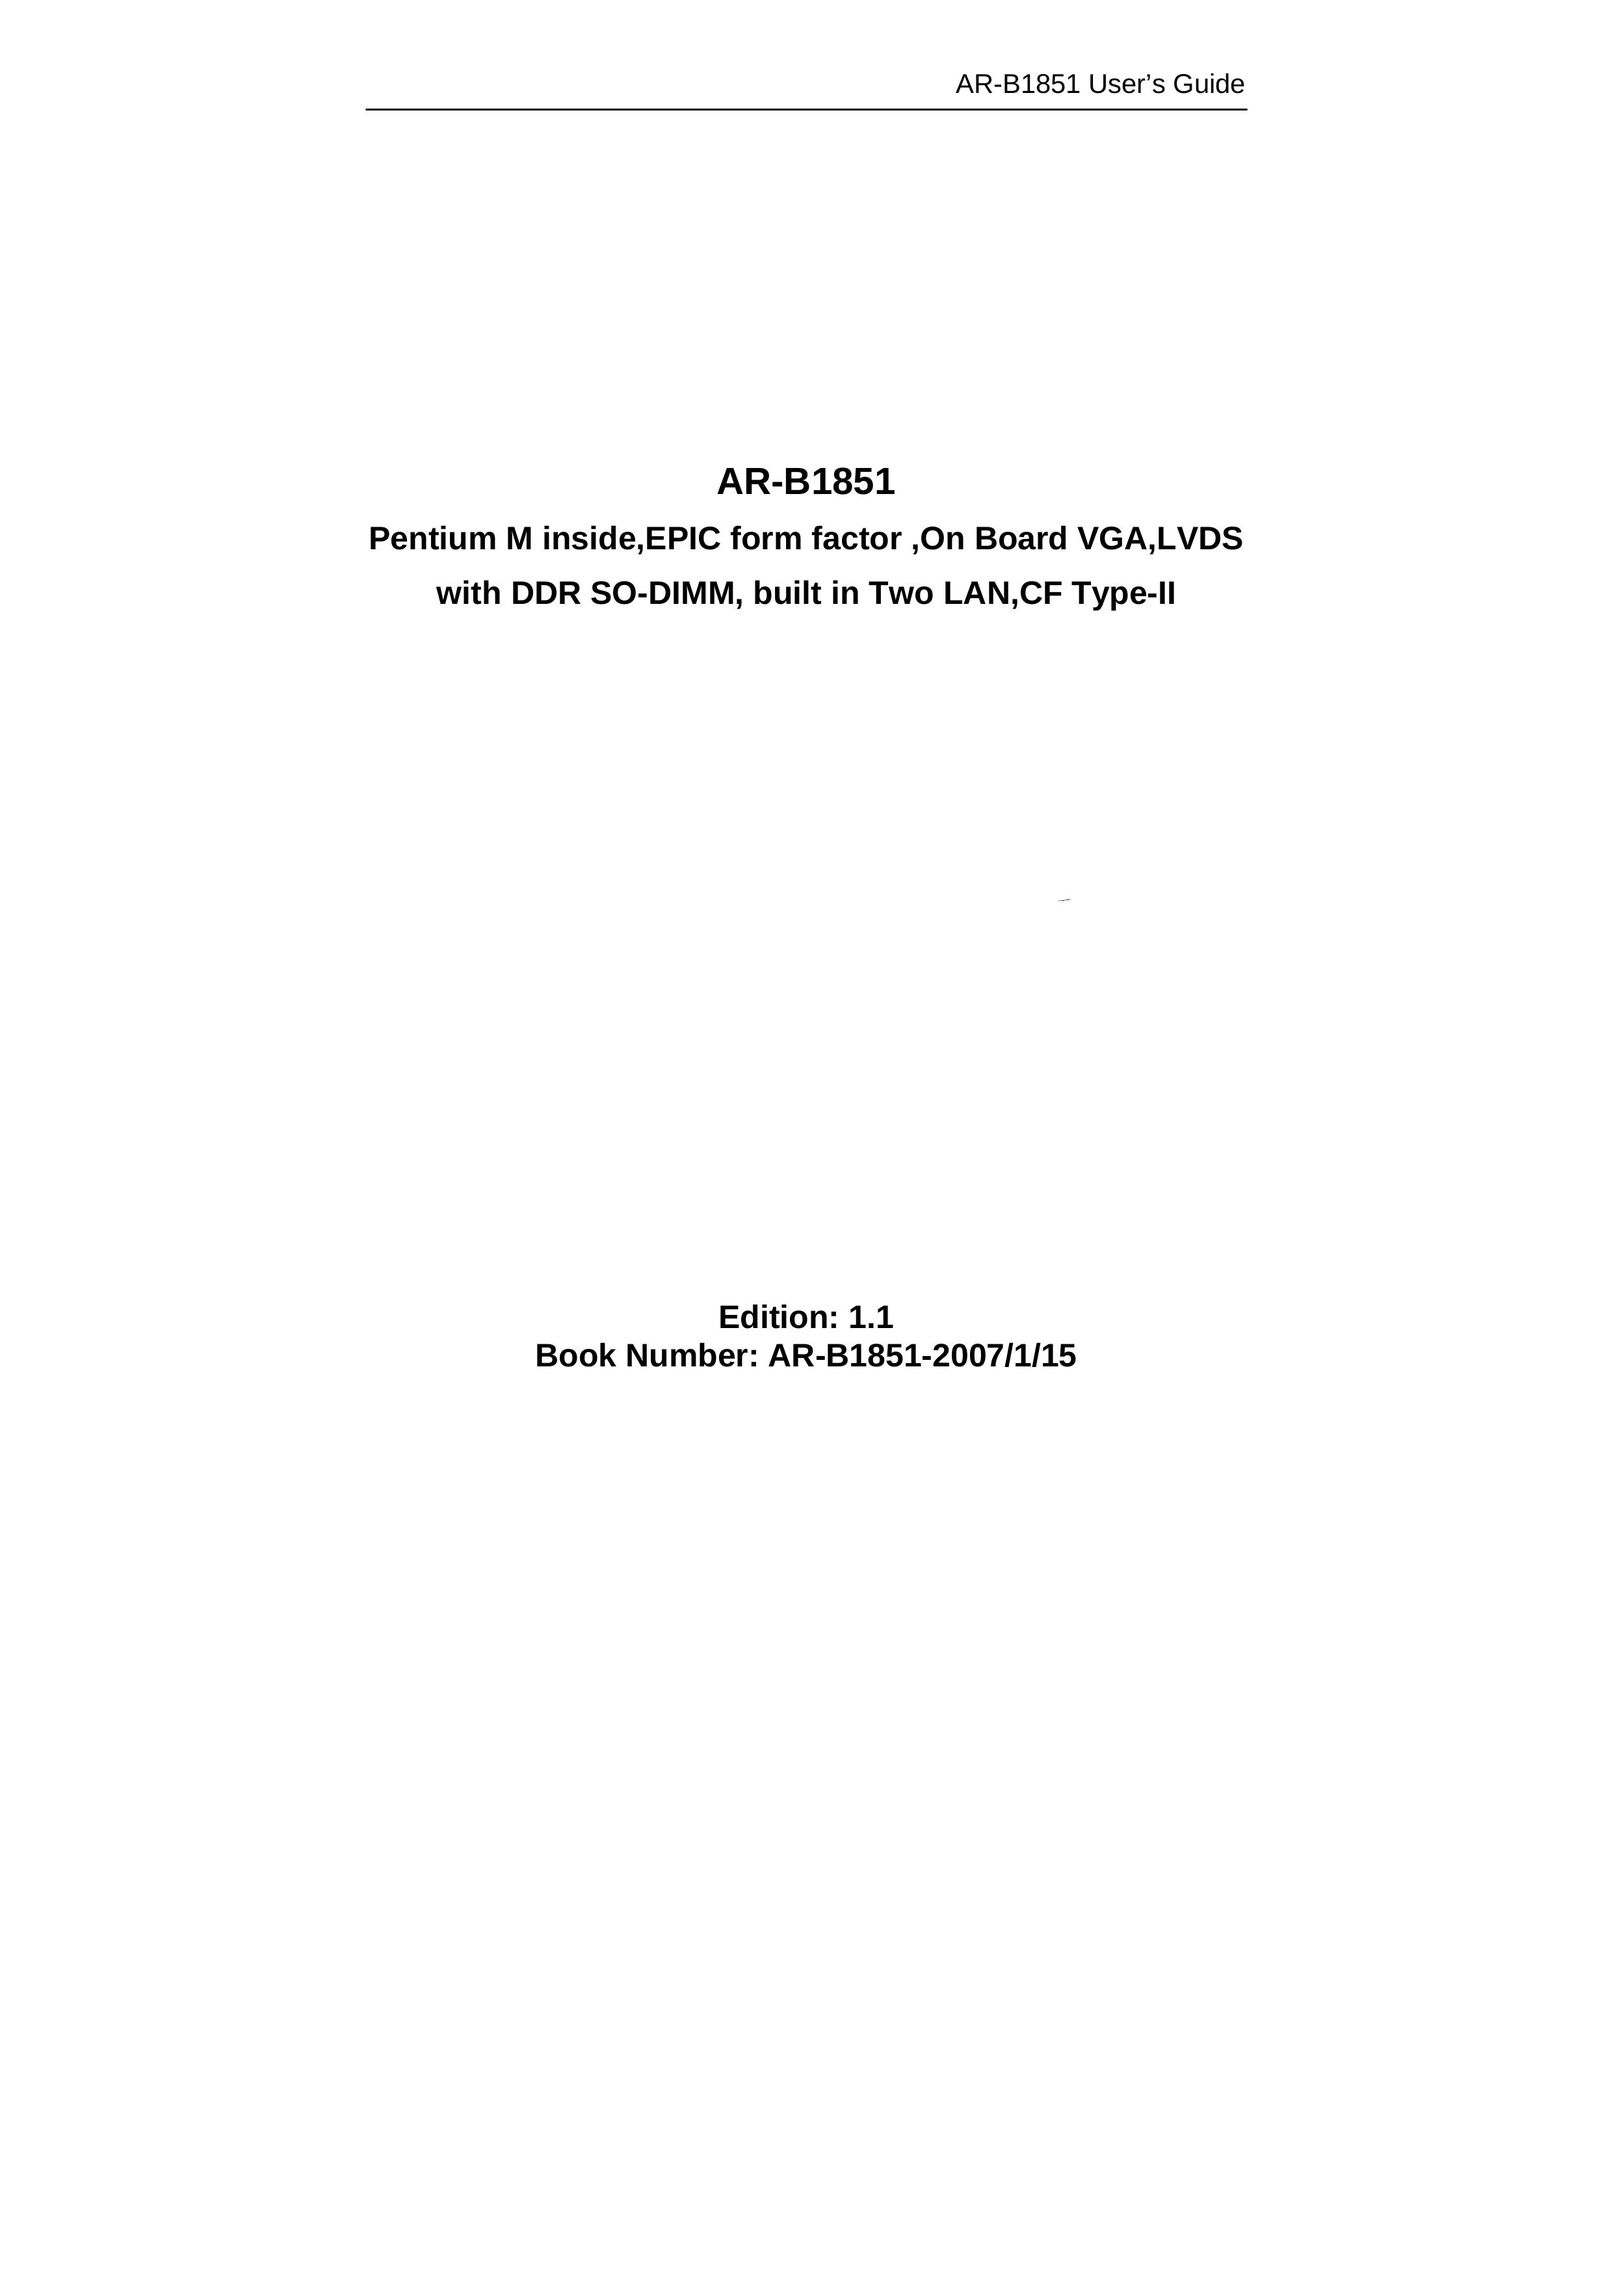 ADS Technologies AR-B1851 Personal Computer User Manual